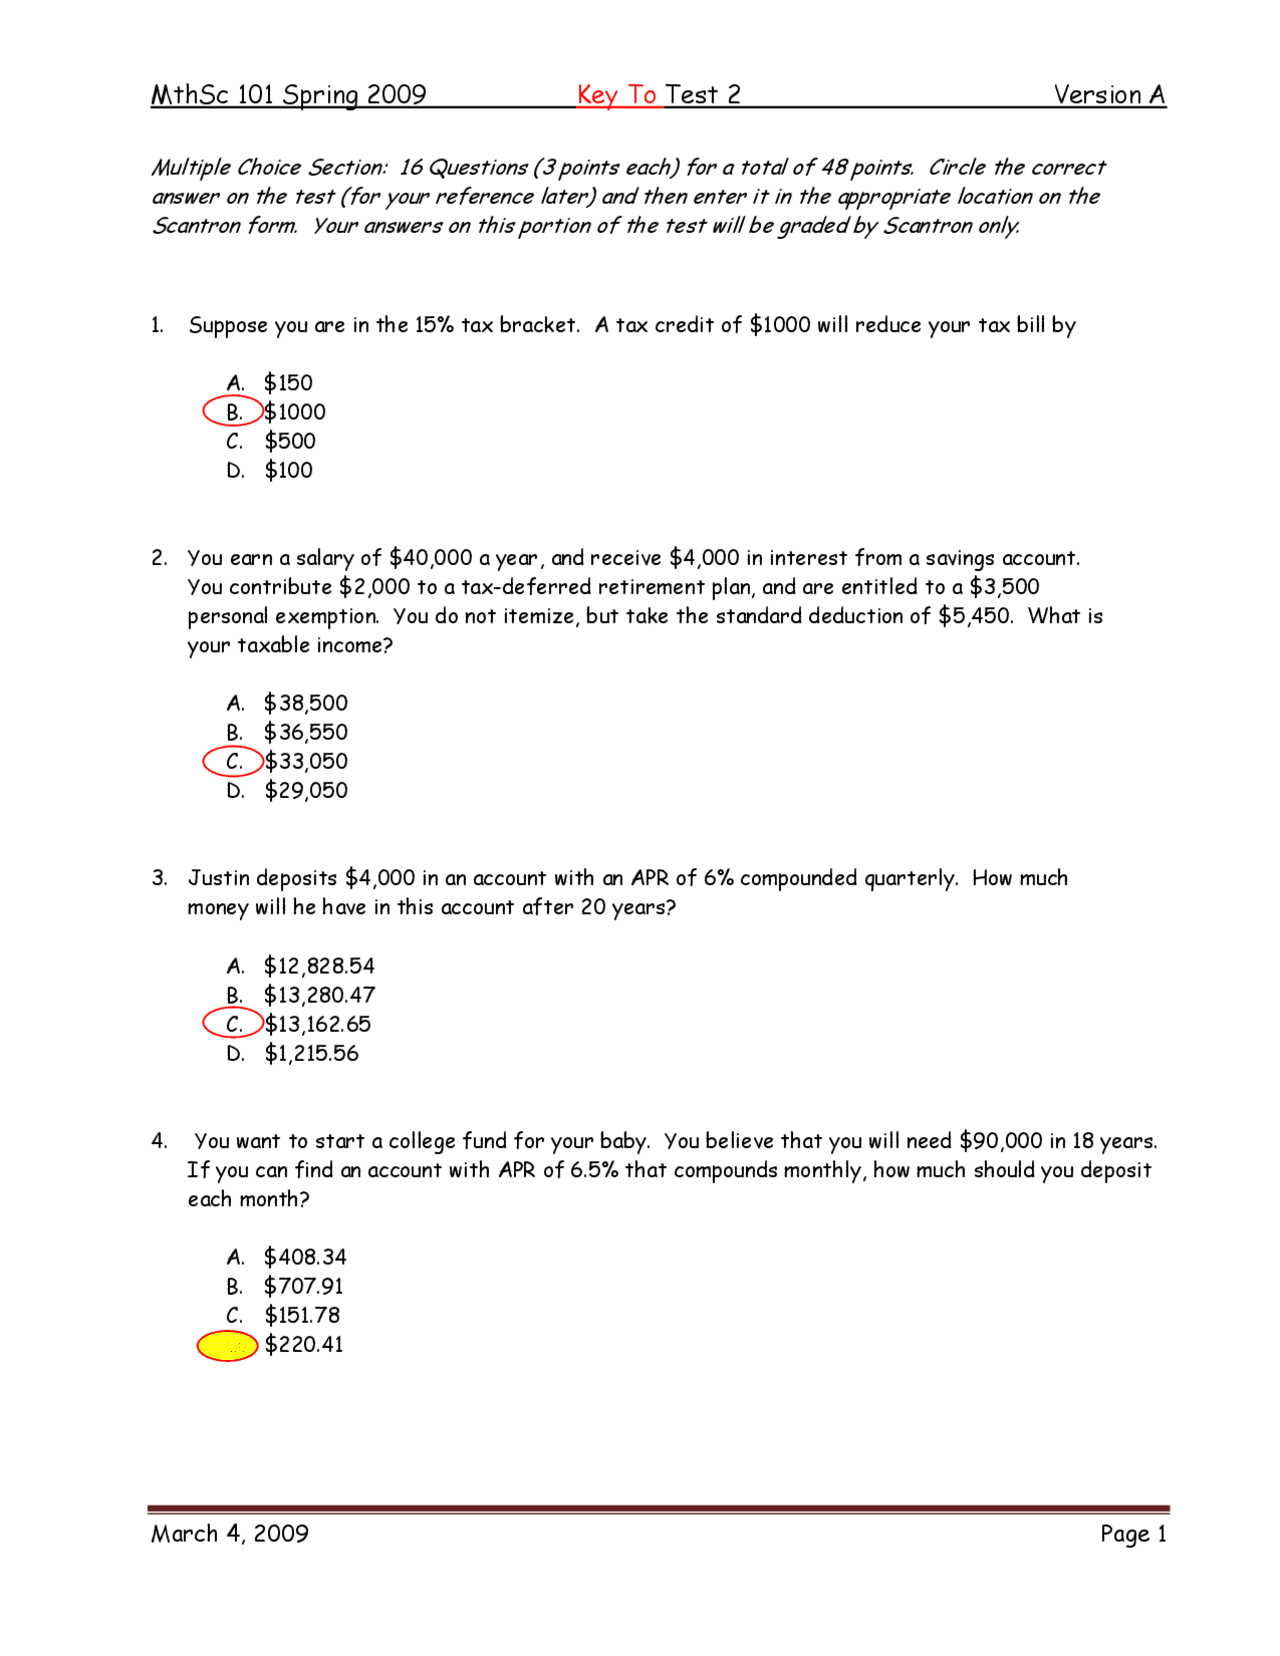 answer-key-to-test-2-essential-math-mthsc-101-exams-mathematics-docsity-math-worksheet-answers